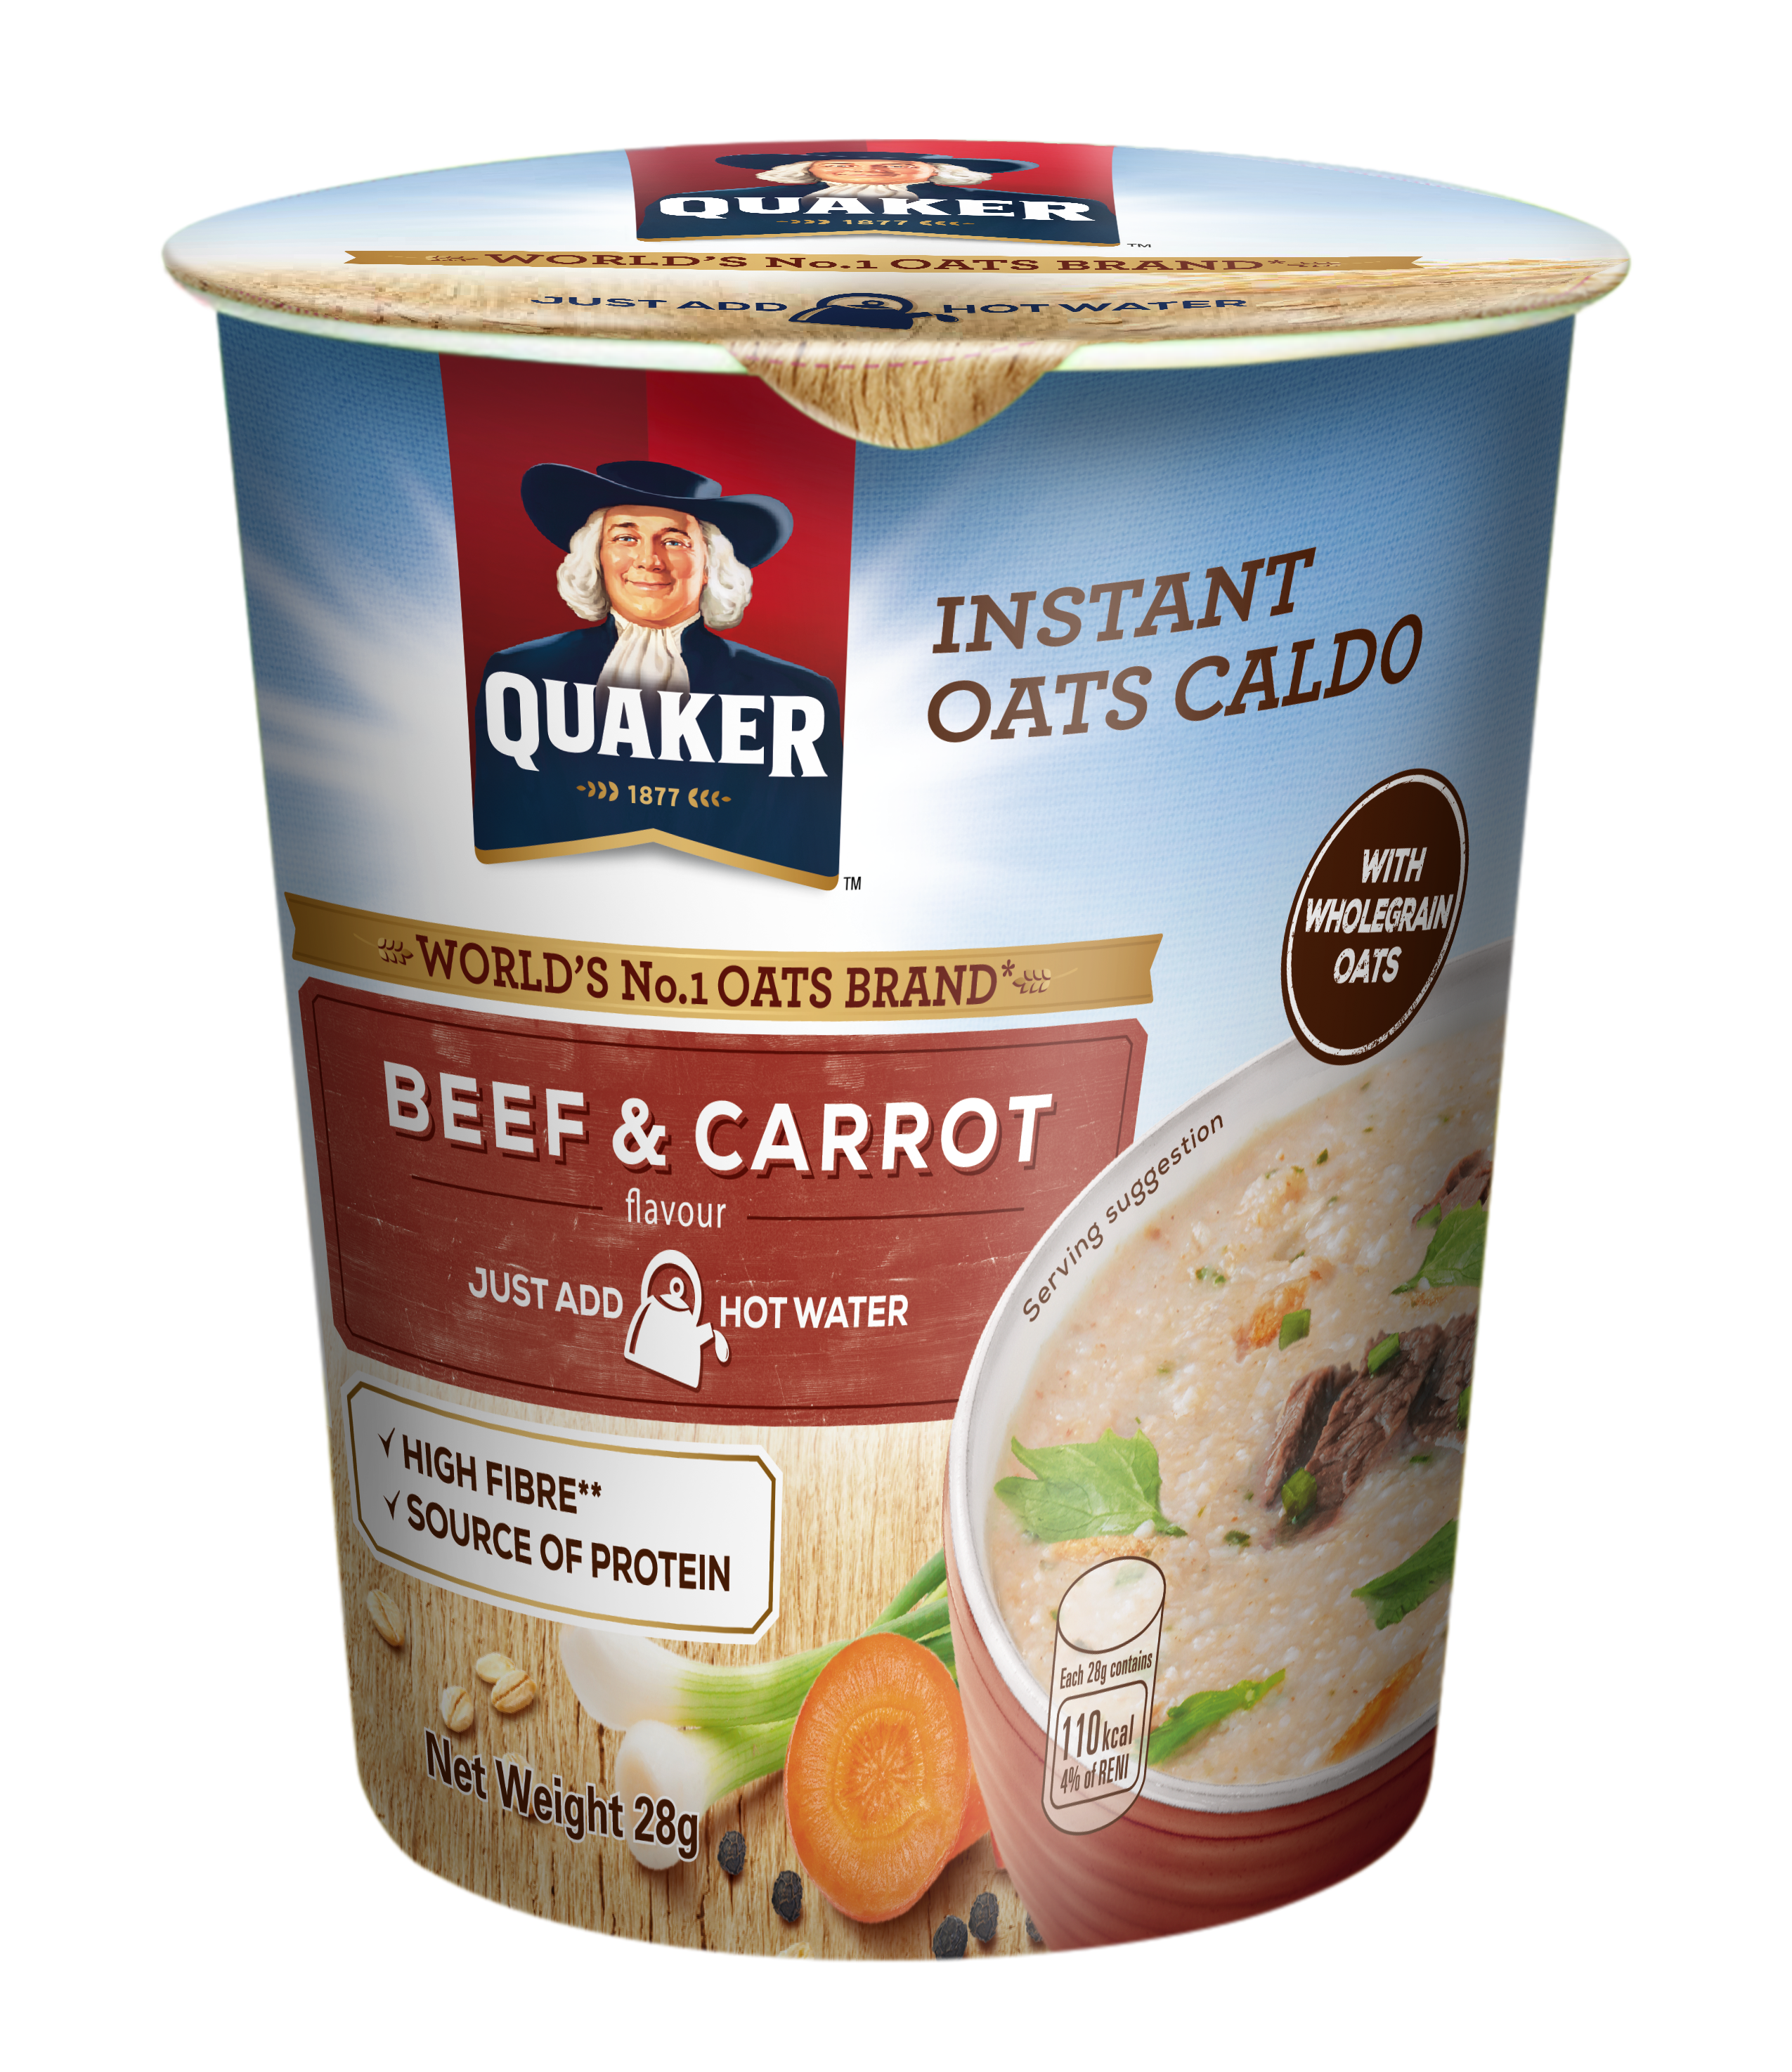 Oatmeal clipart porridge. About quaker flavored oats